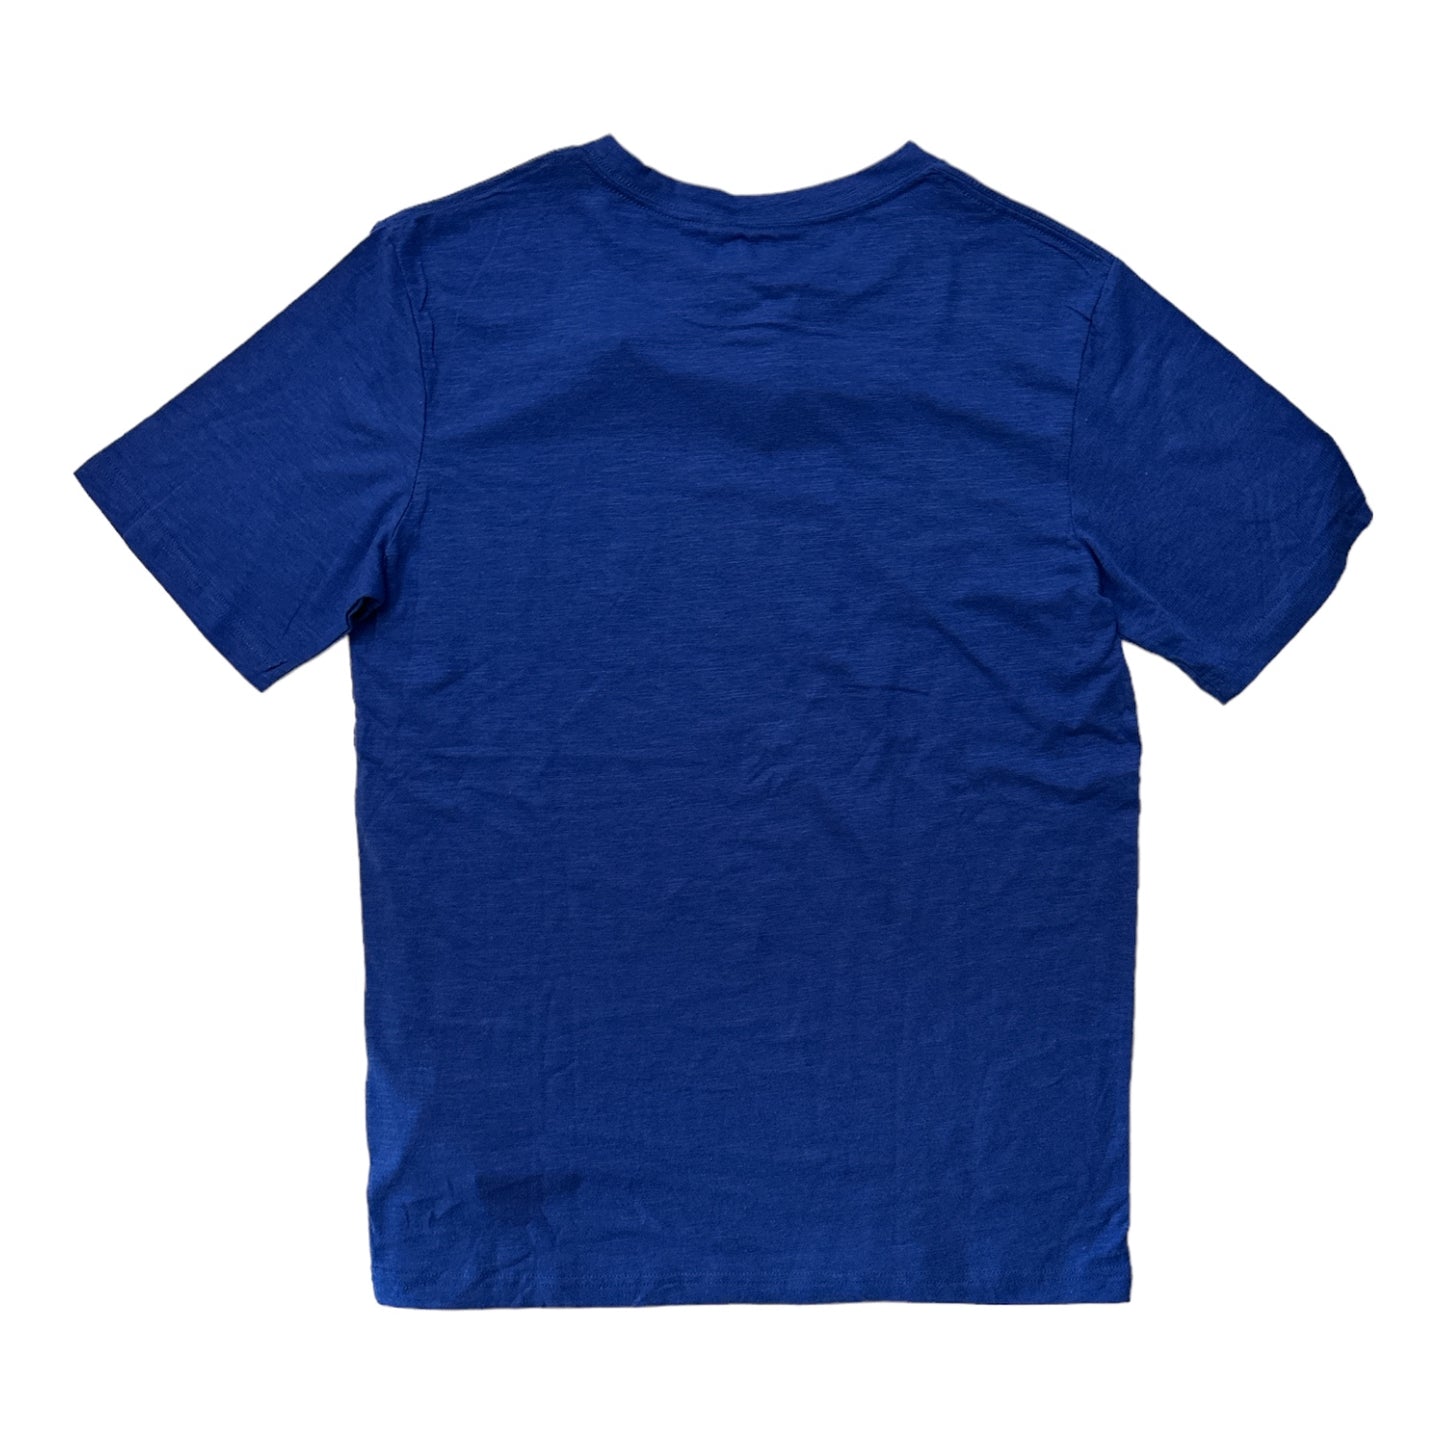 NFL Men's Graphic Sports Printed Short Sleeve T-Shirt